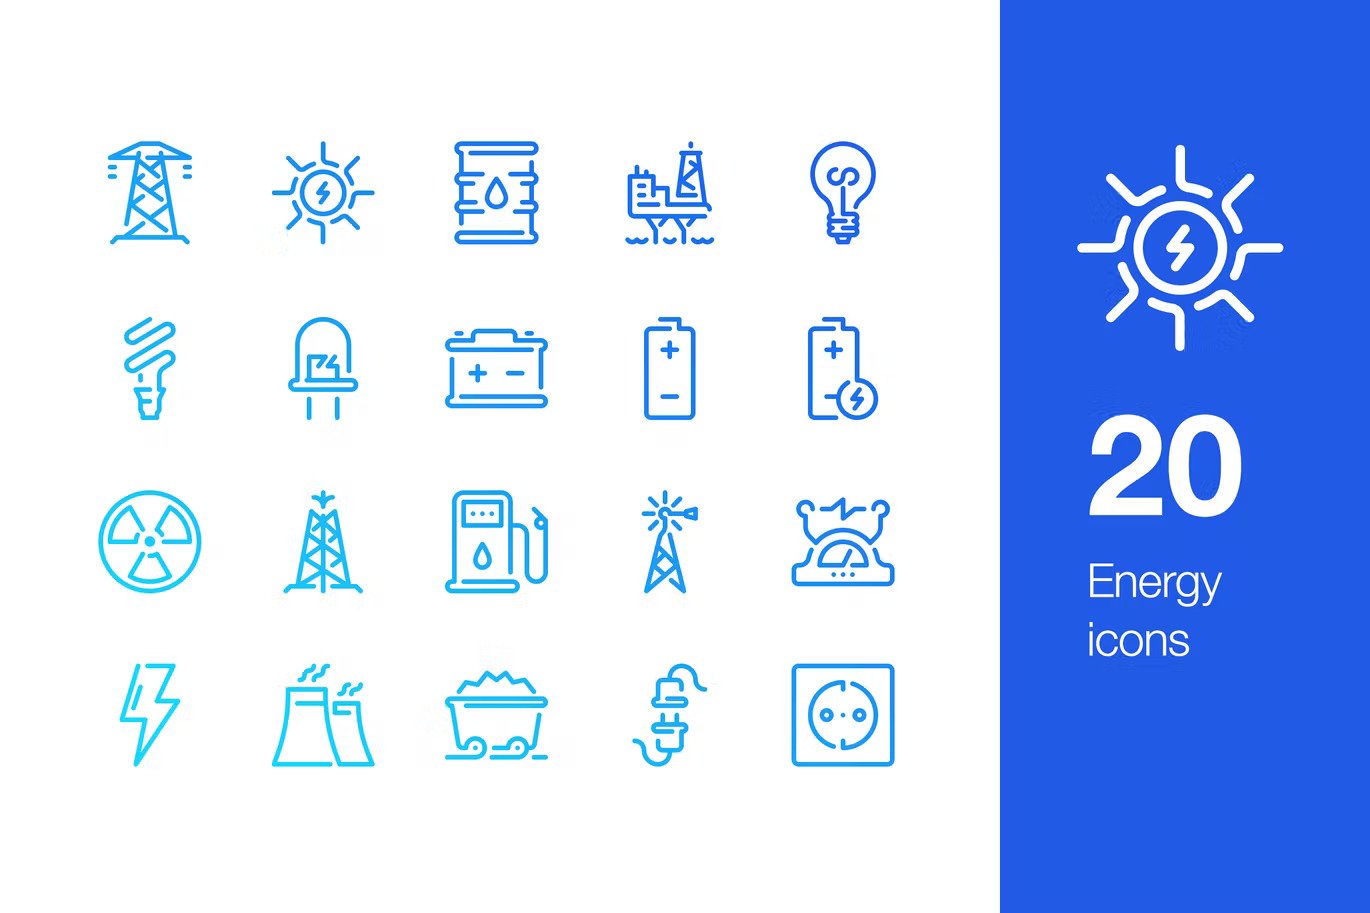 Twenty powerful energy icons